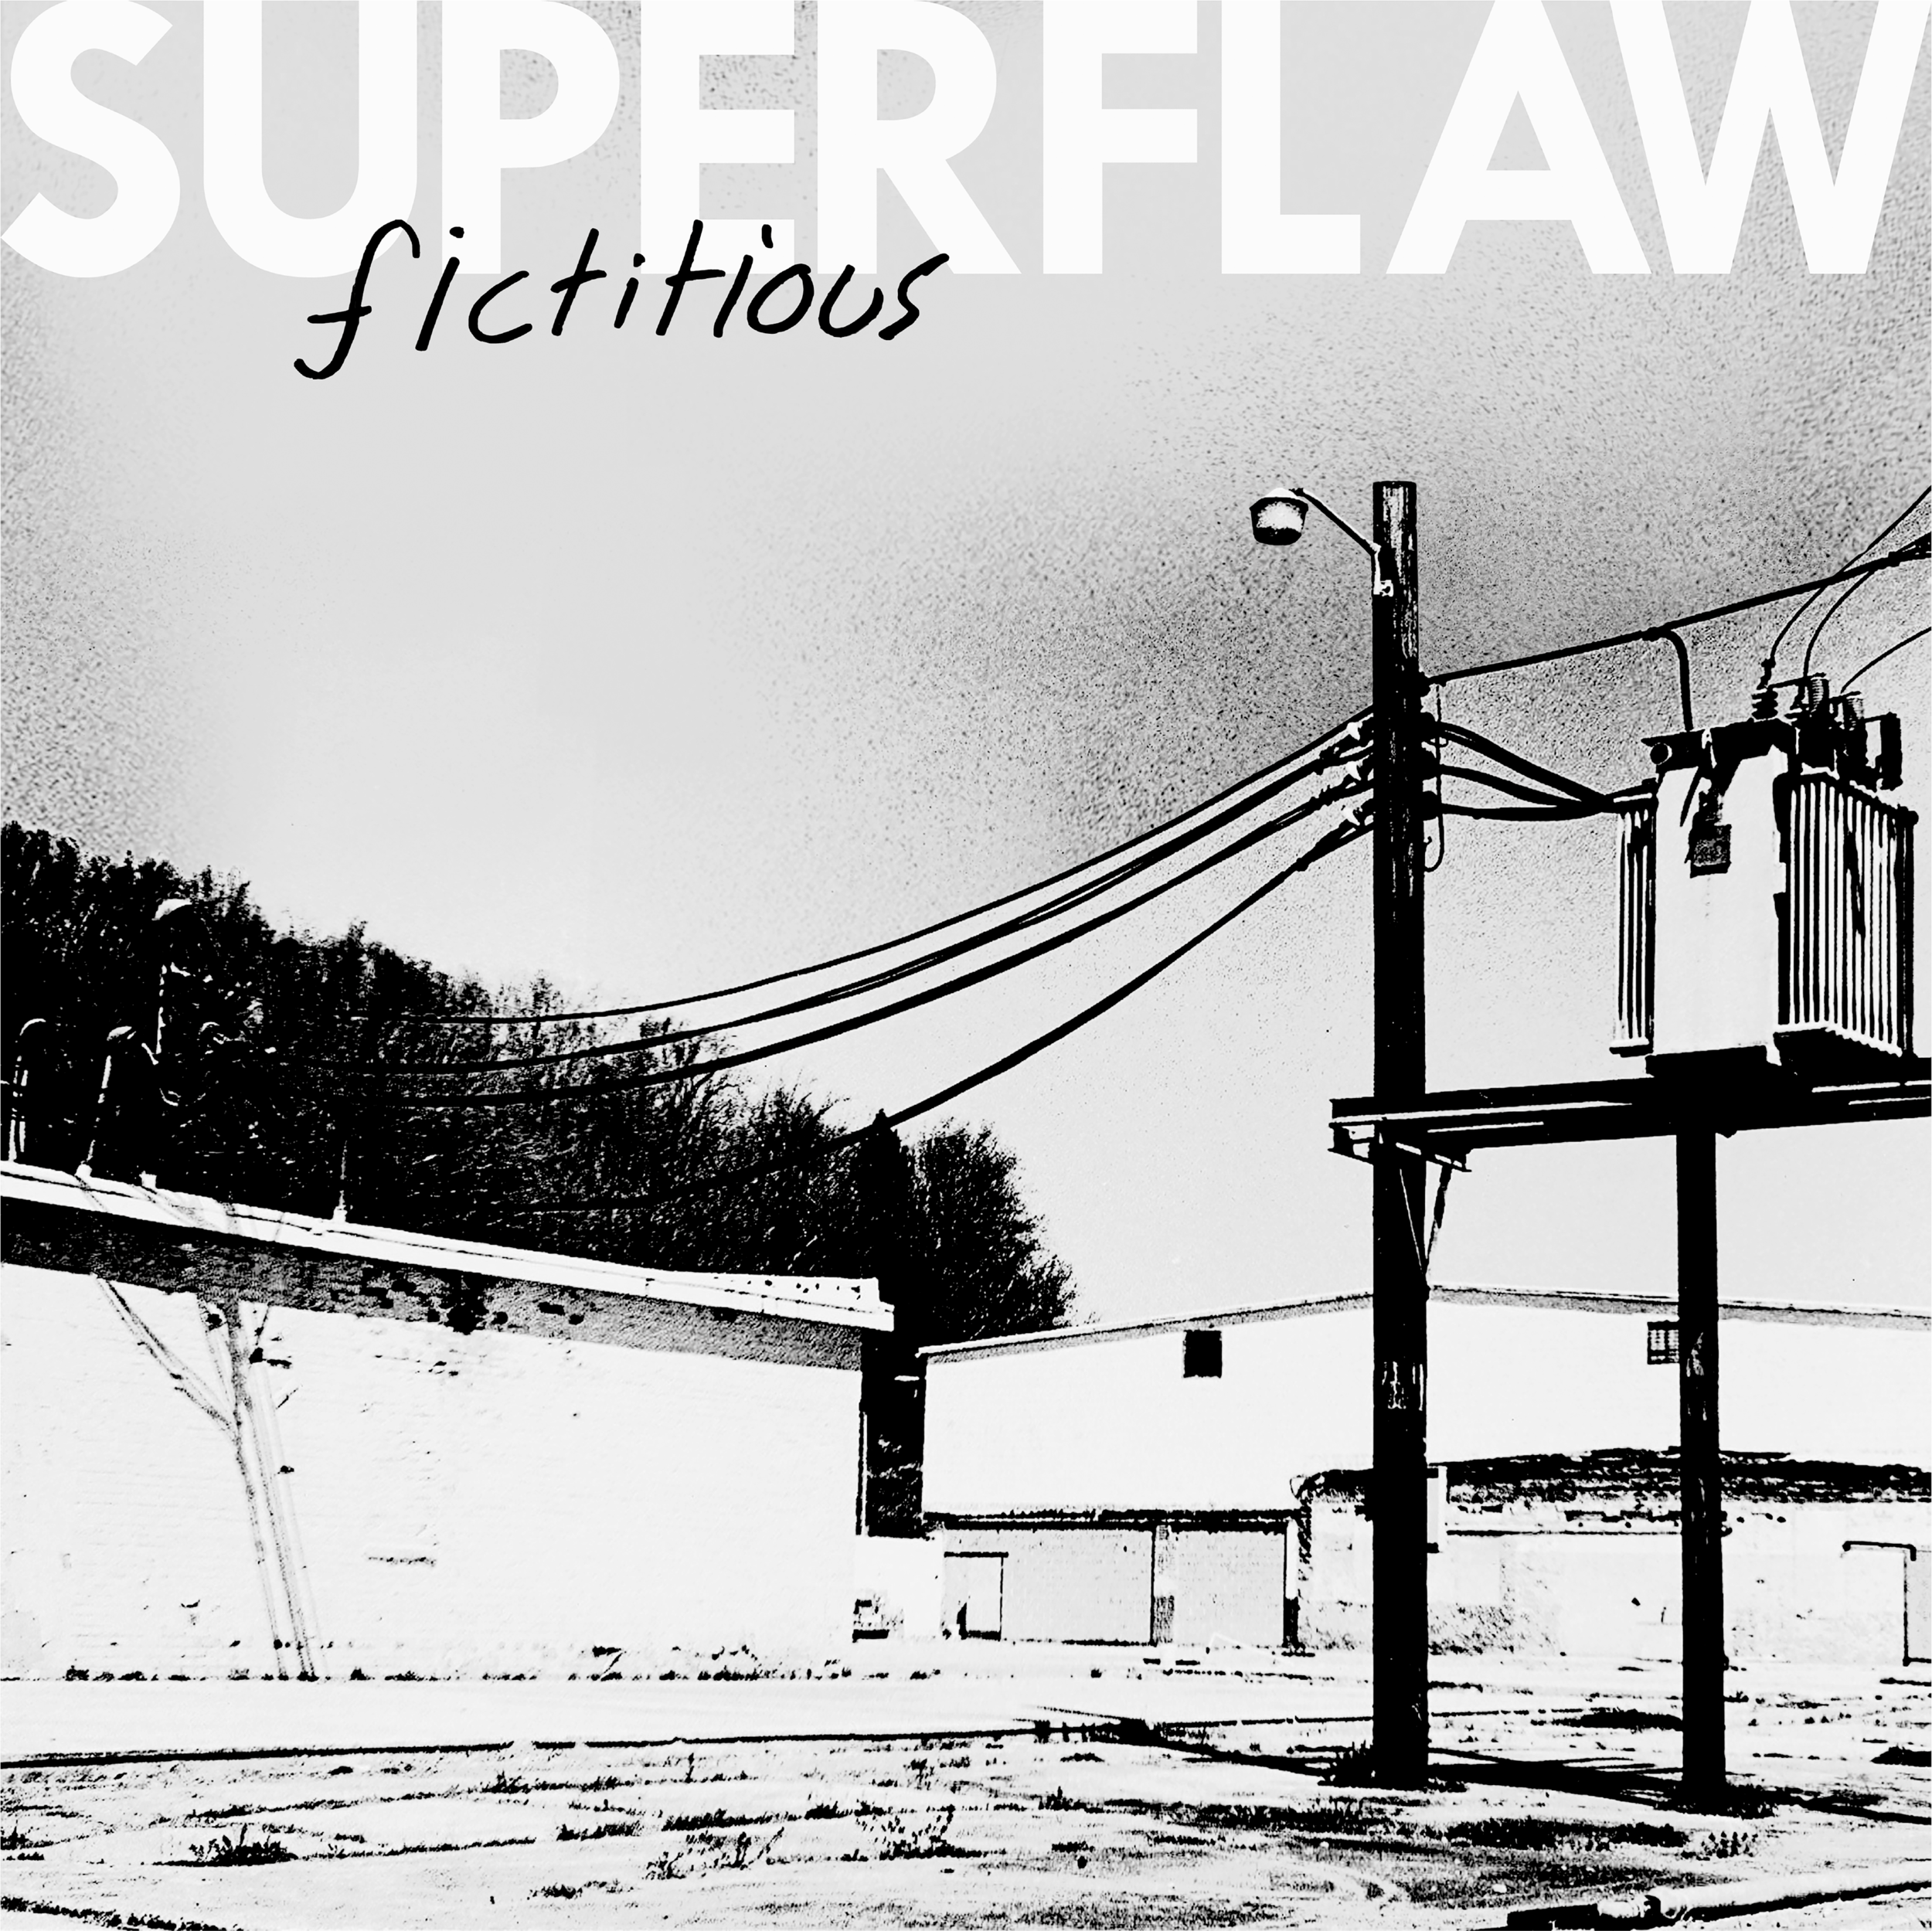 Superflaw - "Fictitious" (2021) - Vinyl